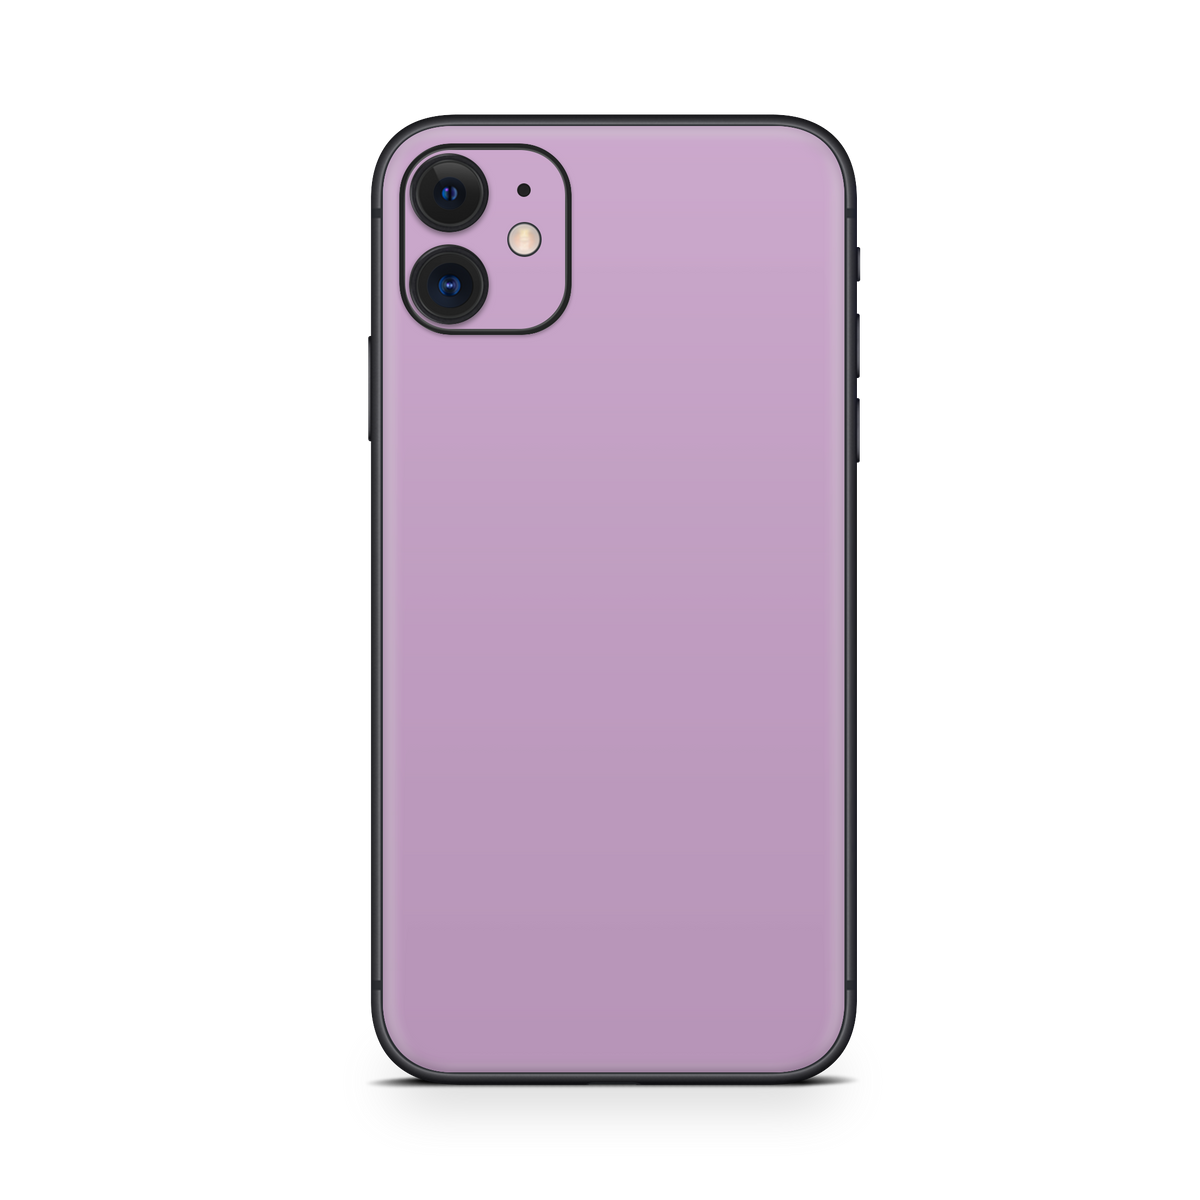 Apple iPhone Soft Lilac Skin